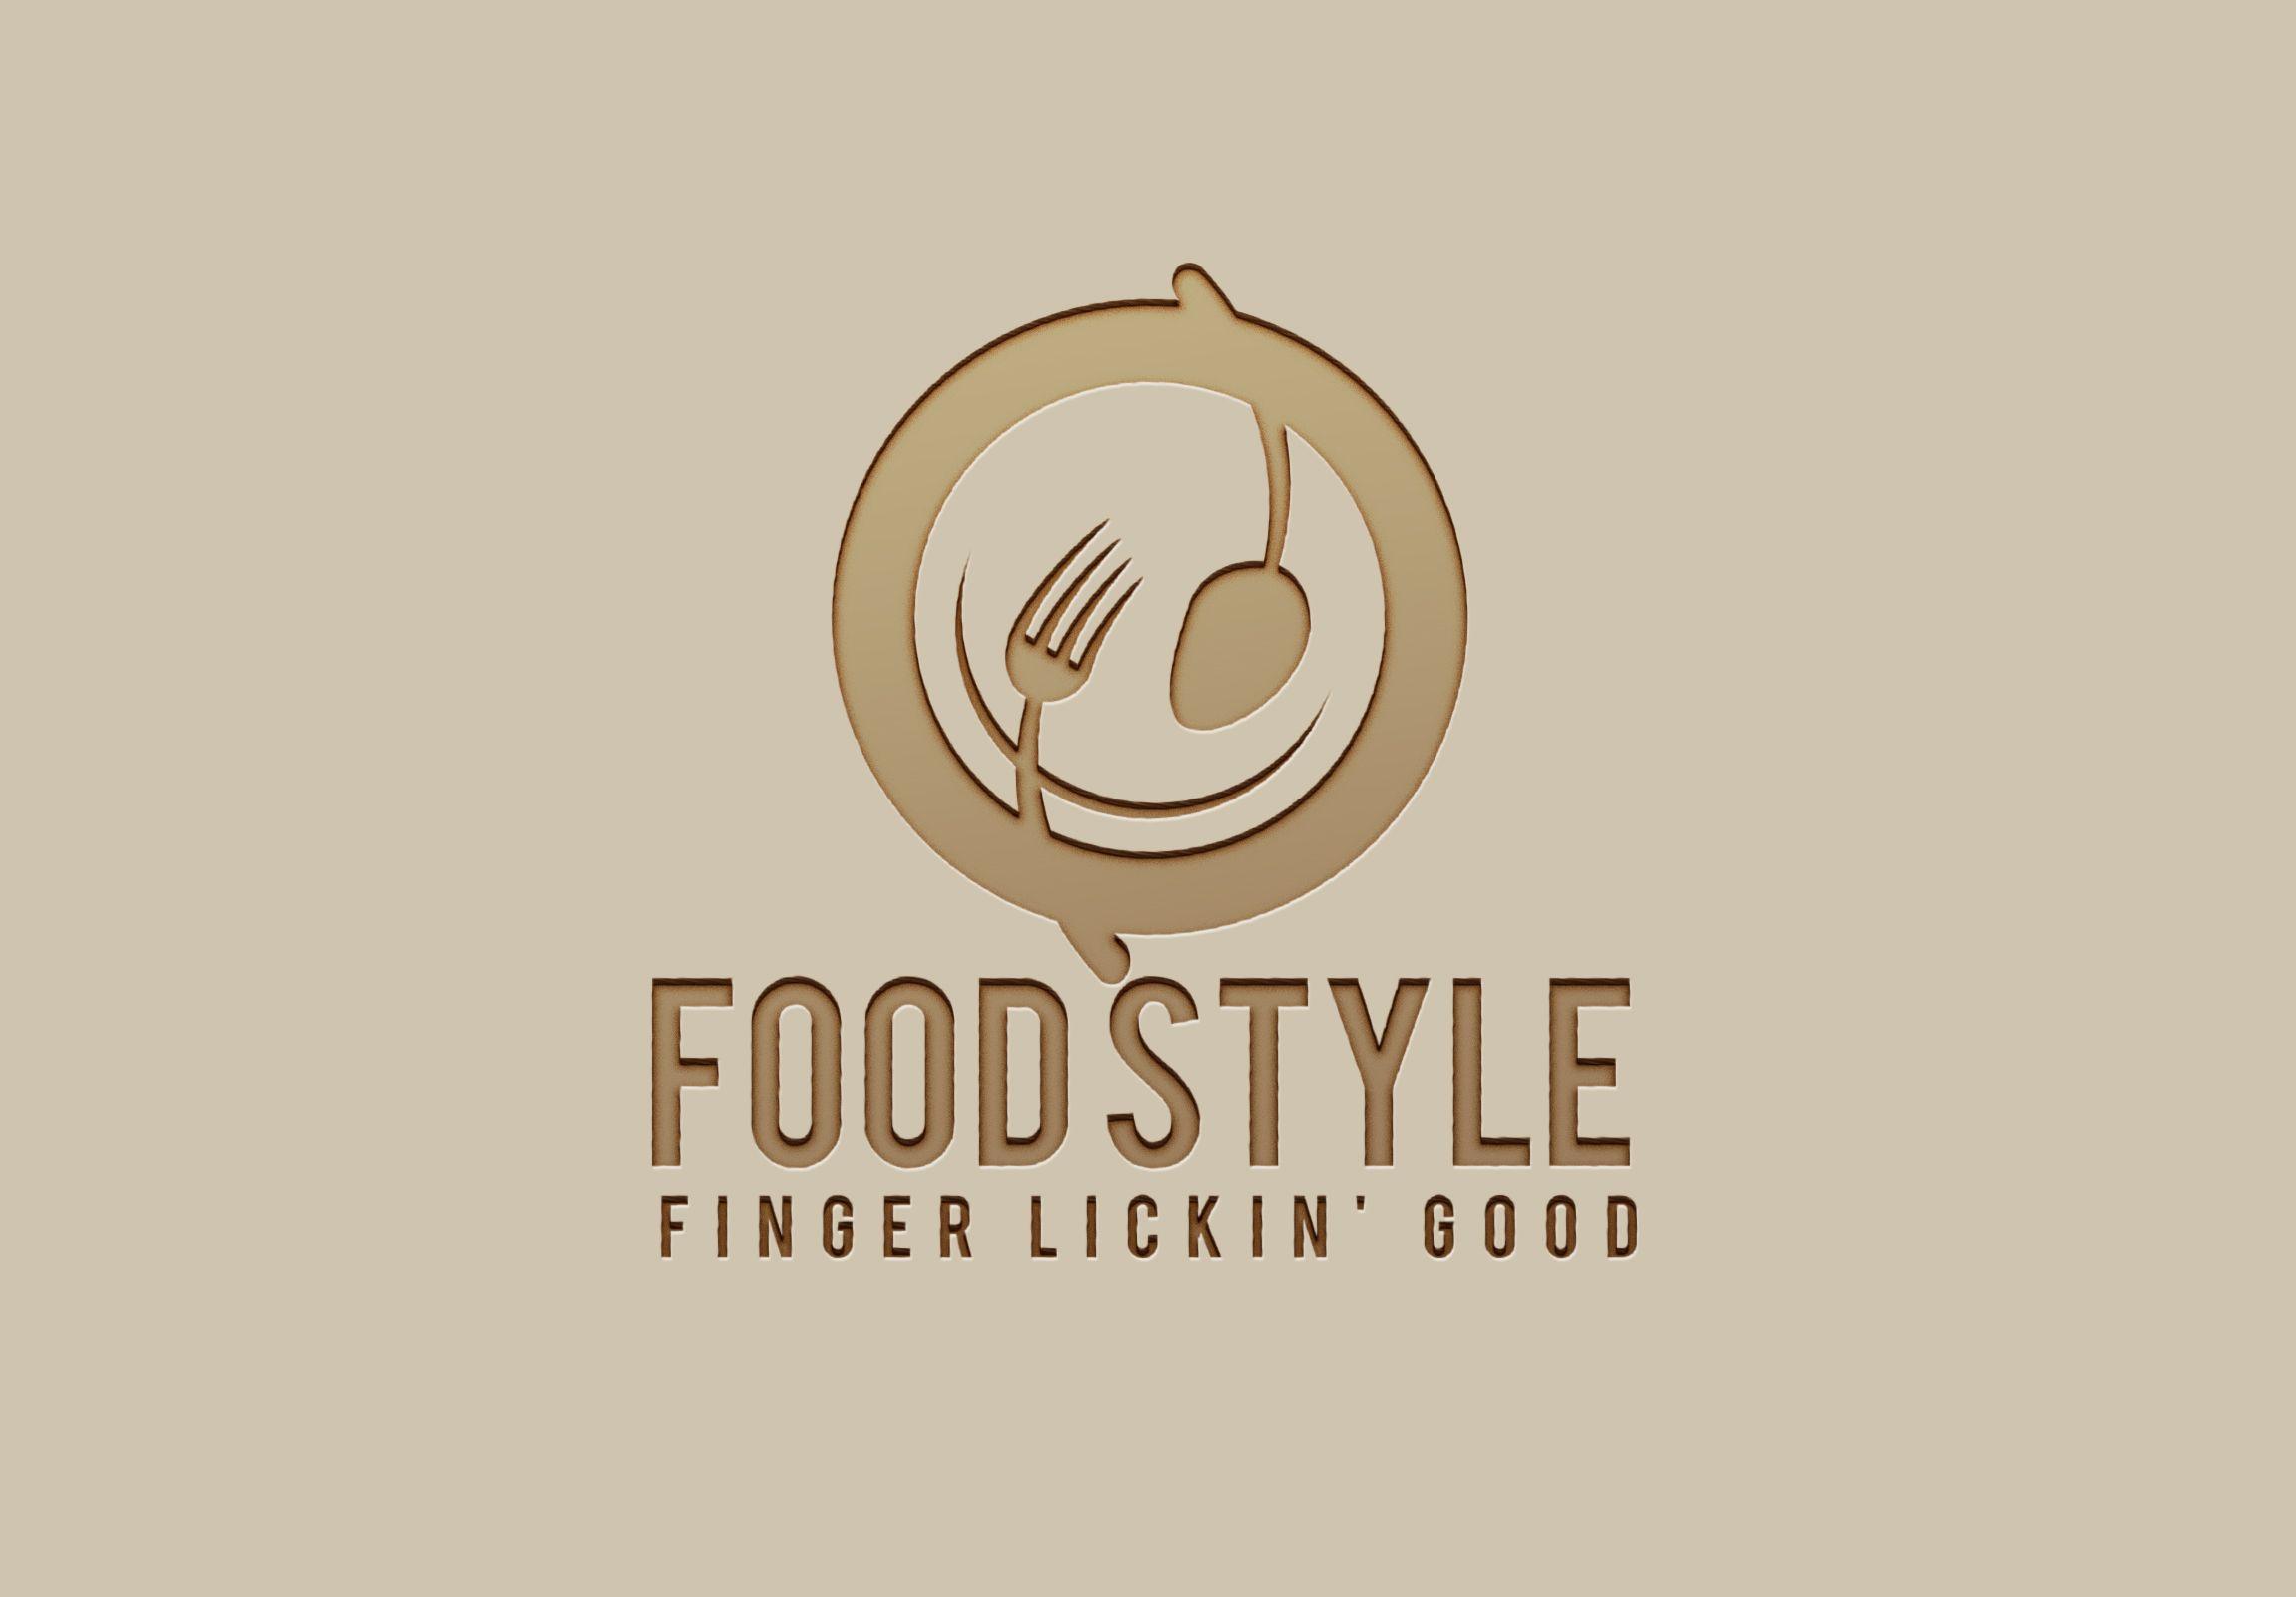 Restaurant Business Logo - Design Seafood, Fast Food, Restaurant, Food Blog business Logo for ...